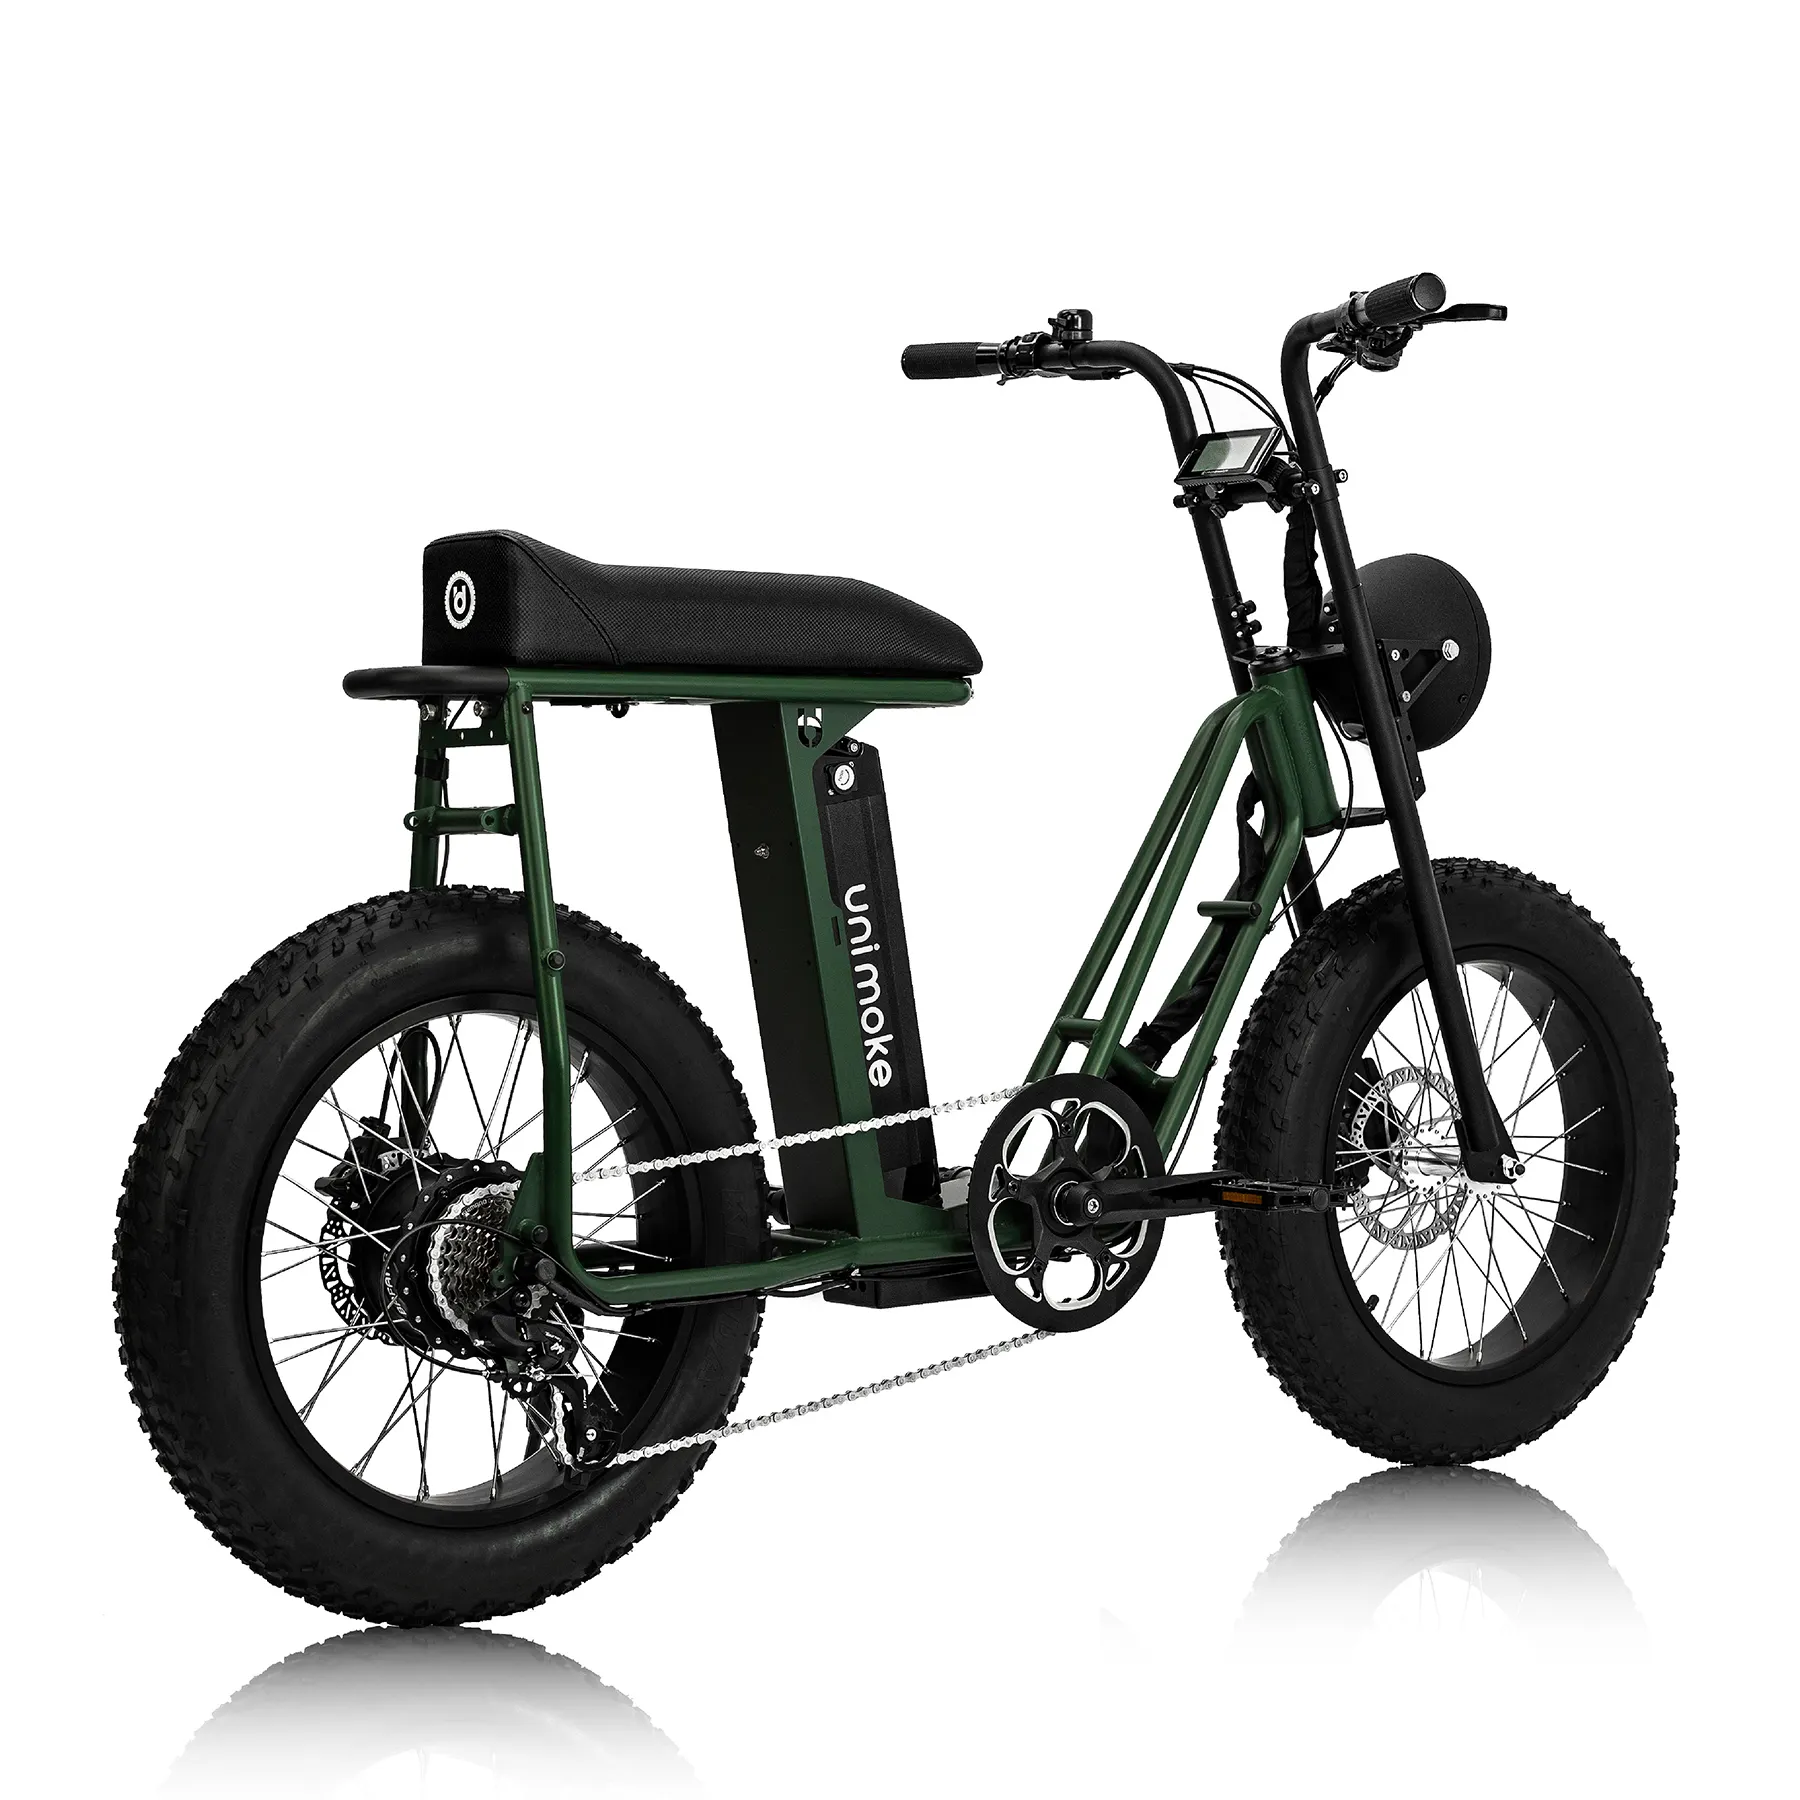 Agente/distribuidor bicicleta eléctrica e-bike color verde Unimoke SW de Urban Drivestyle City fatbike Light off-road